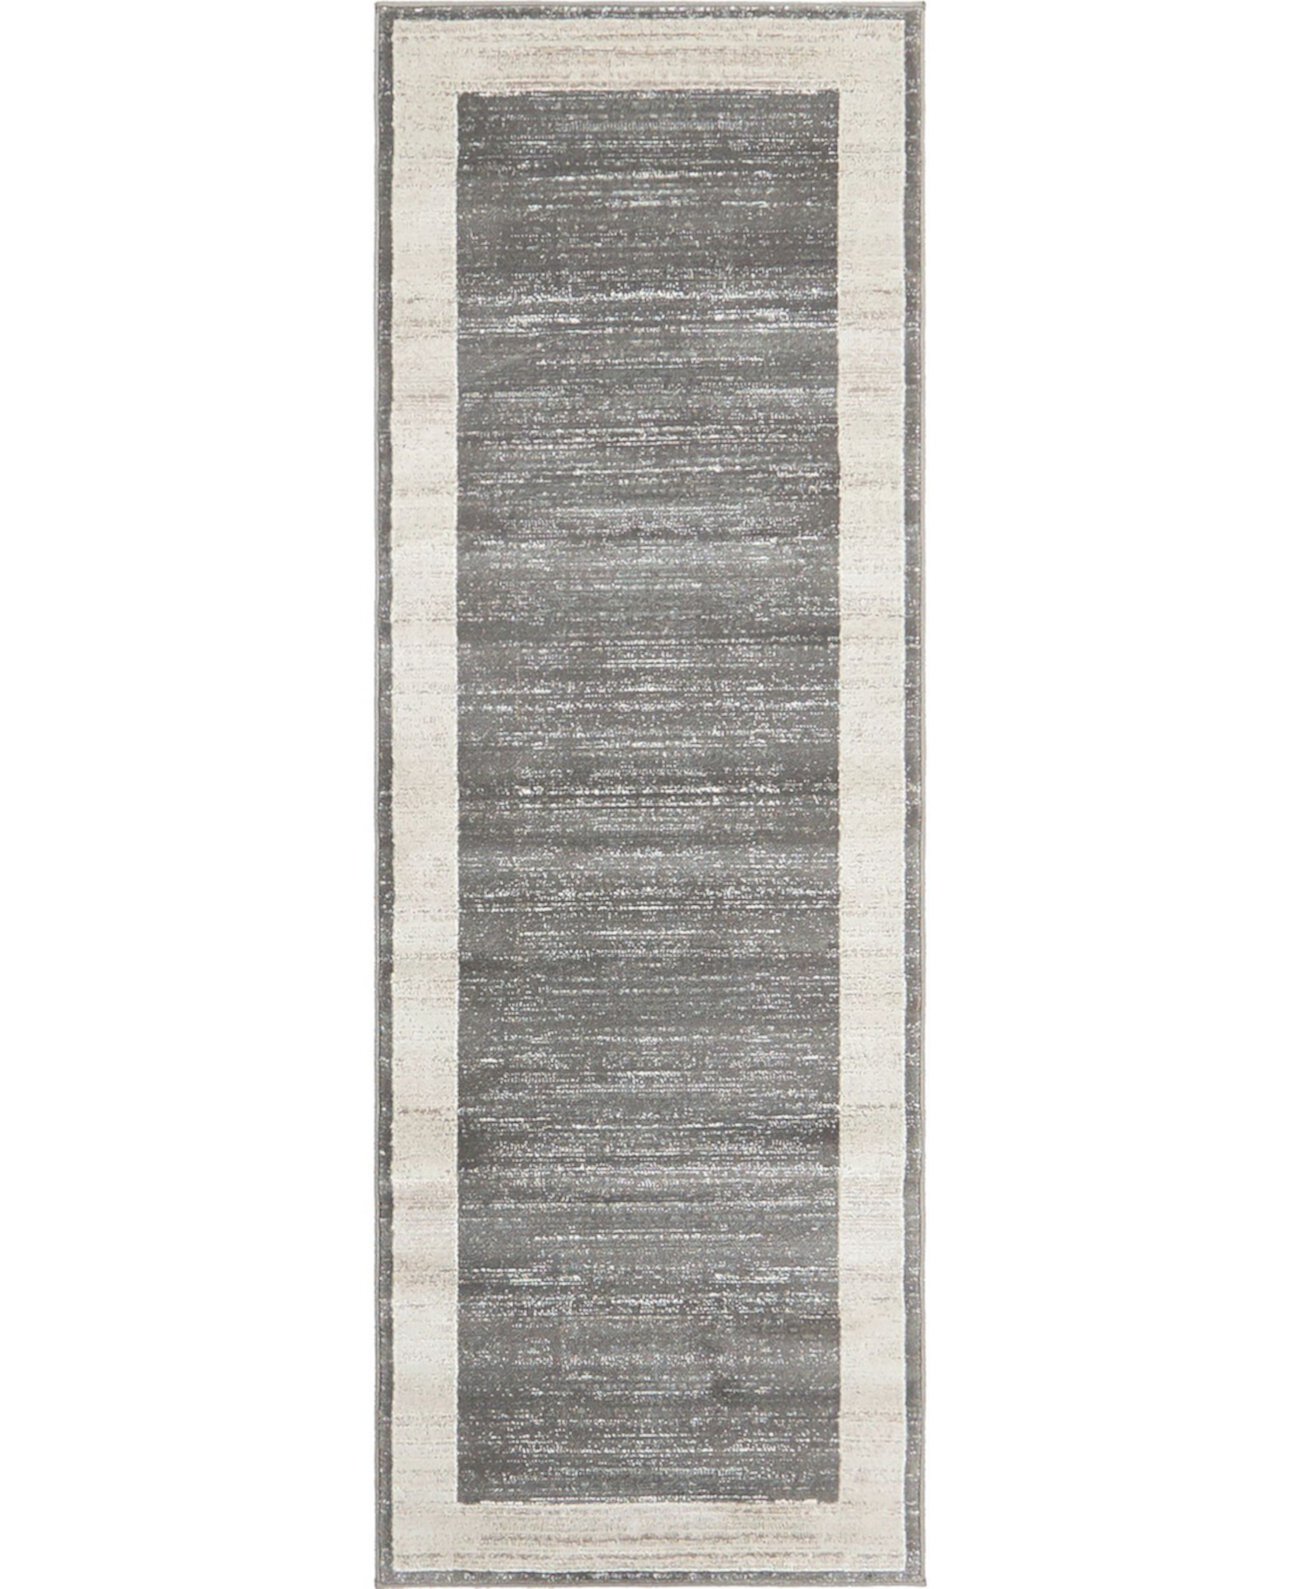 Yorkville Uptown Jzu007 Серый коврик для беговой дорожки размером 2 фута 2 x 6 футов Jill Zarin